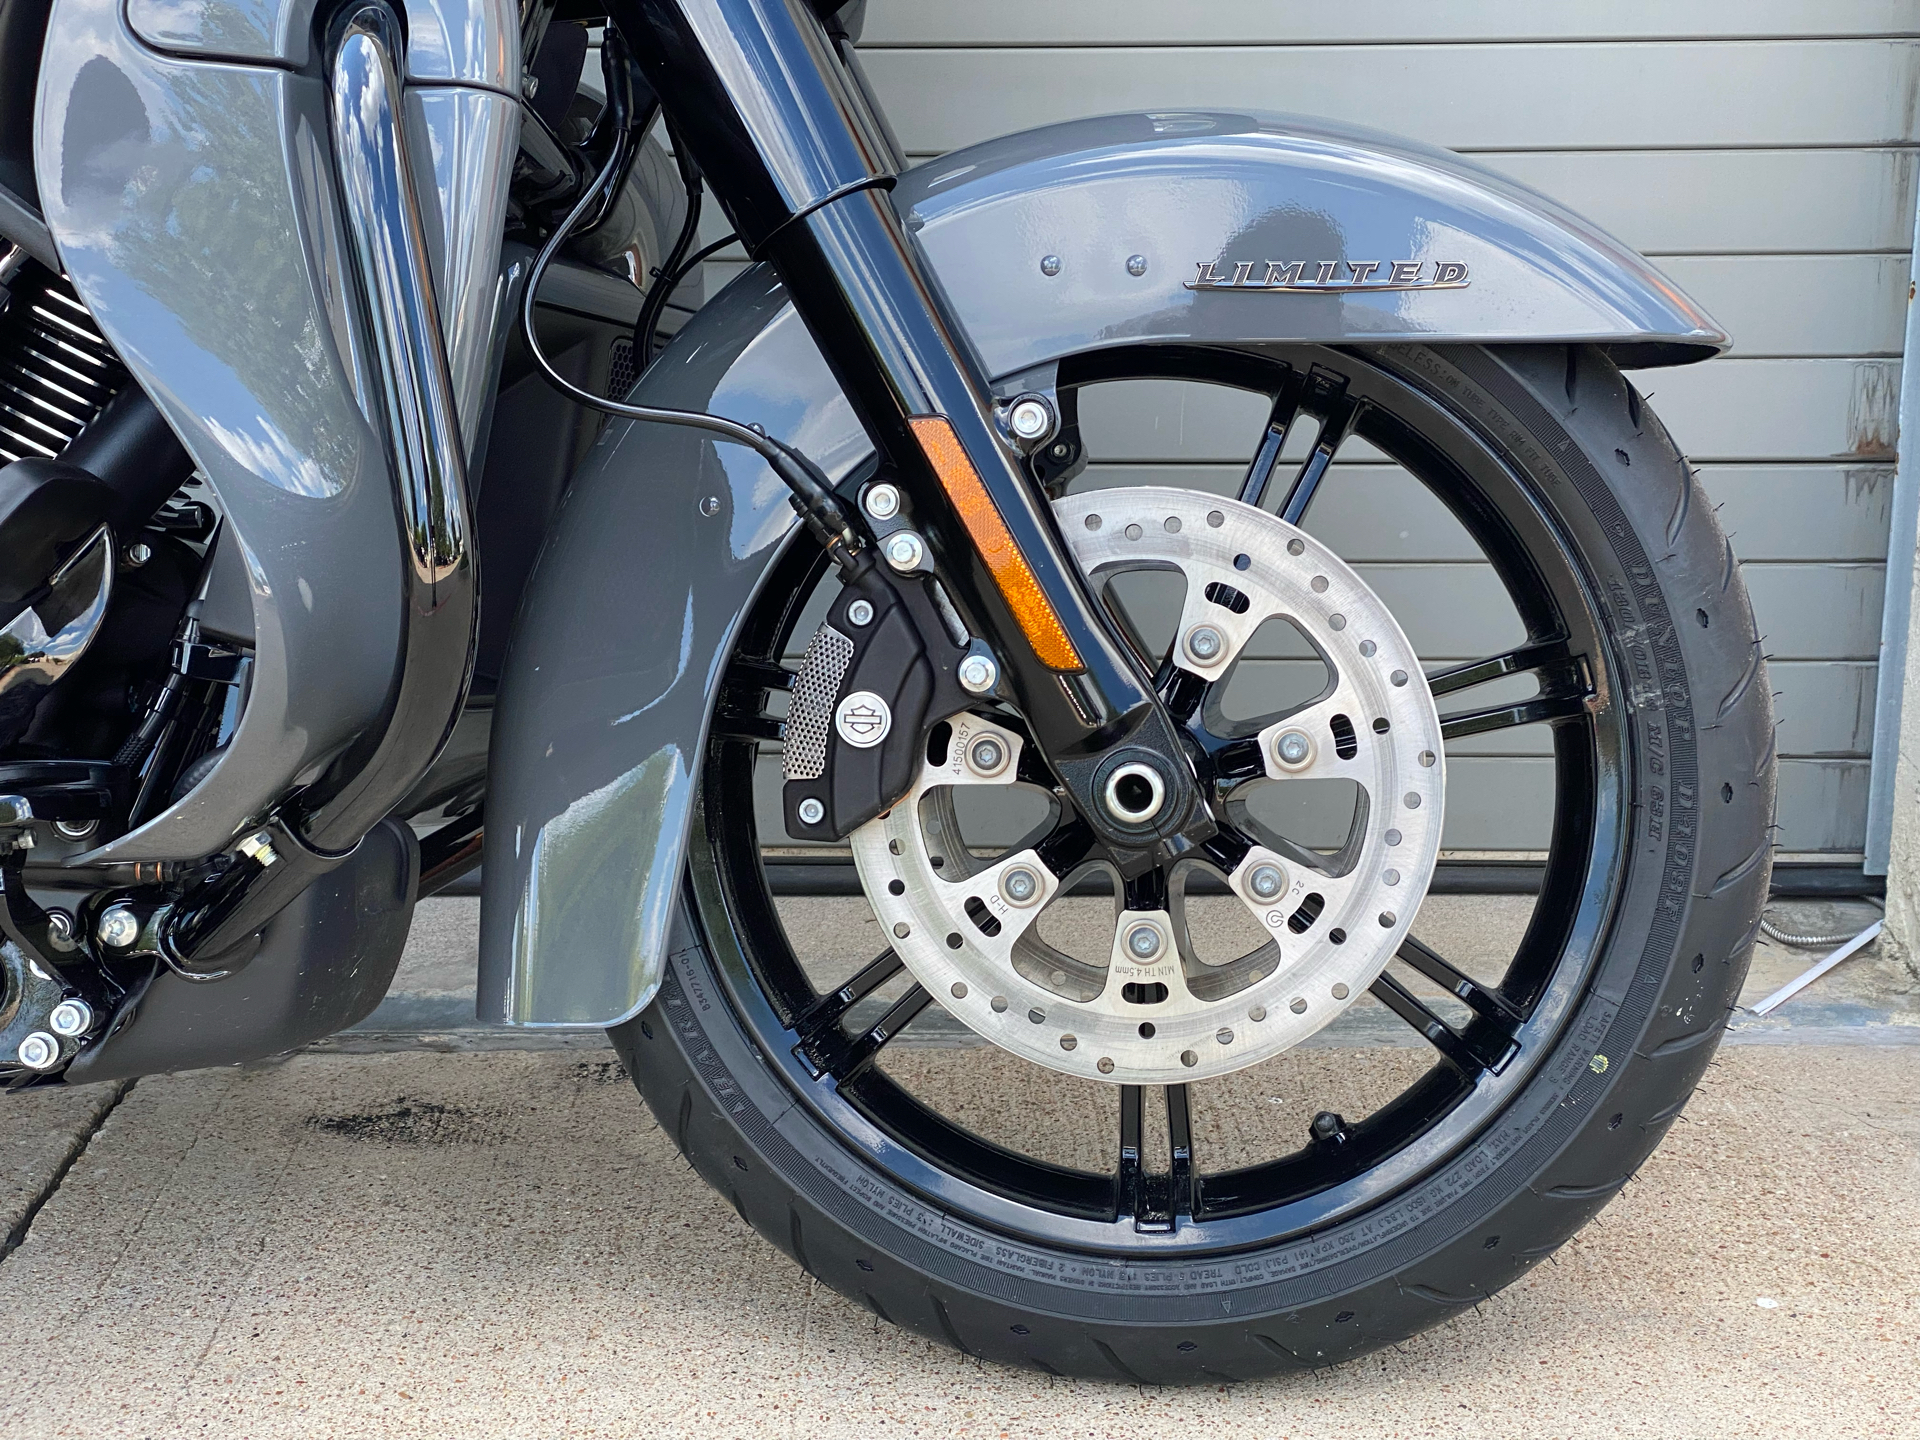 2022 Harley-Davidson Road Glide® Limited in Grand Prairie, Texas - Photo 4